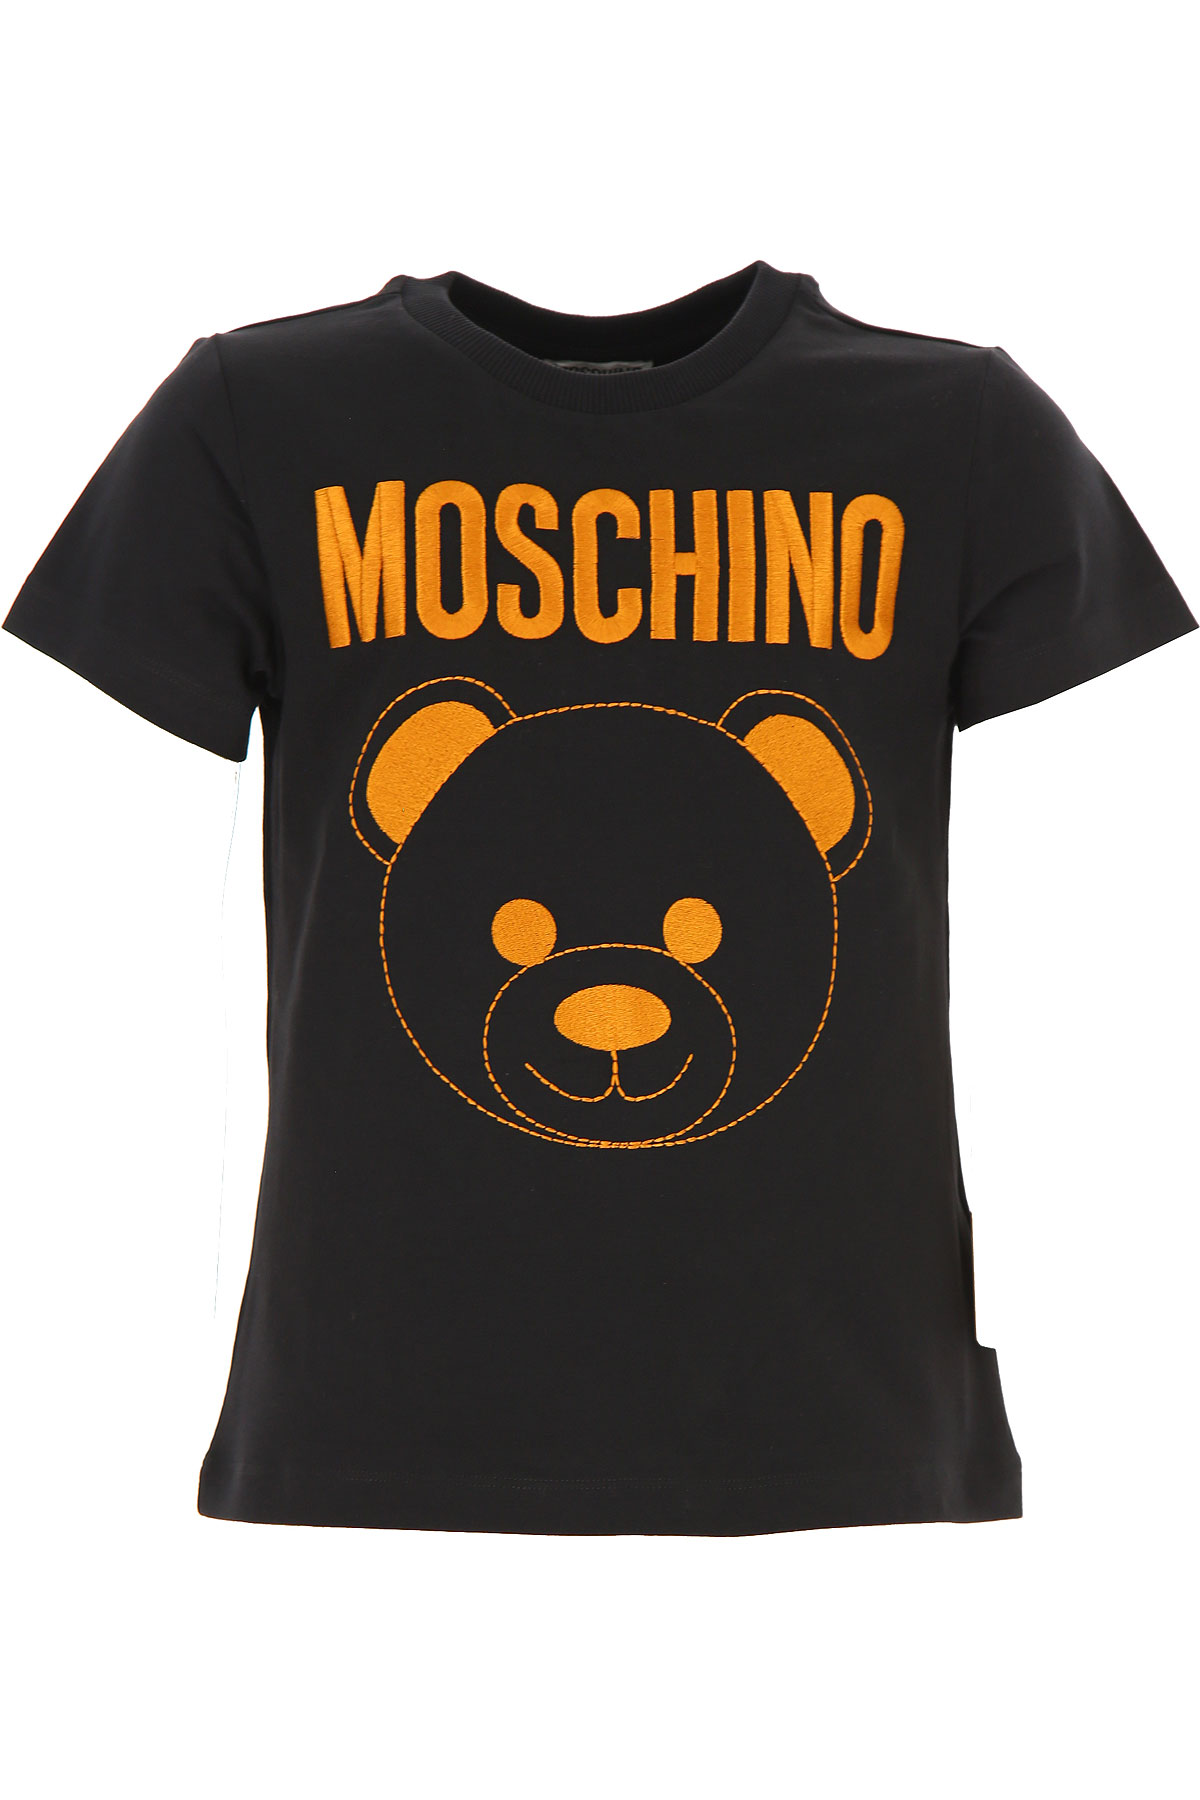 Moschino Kinder T-Shirt für Jungen Günstig im Sale, Schwarz, Baumwolle, 2017, 10Y 12Y 14Y 4Y 6Y 8Y